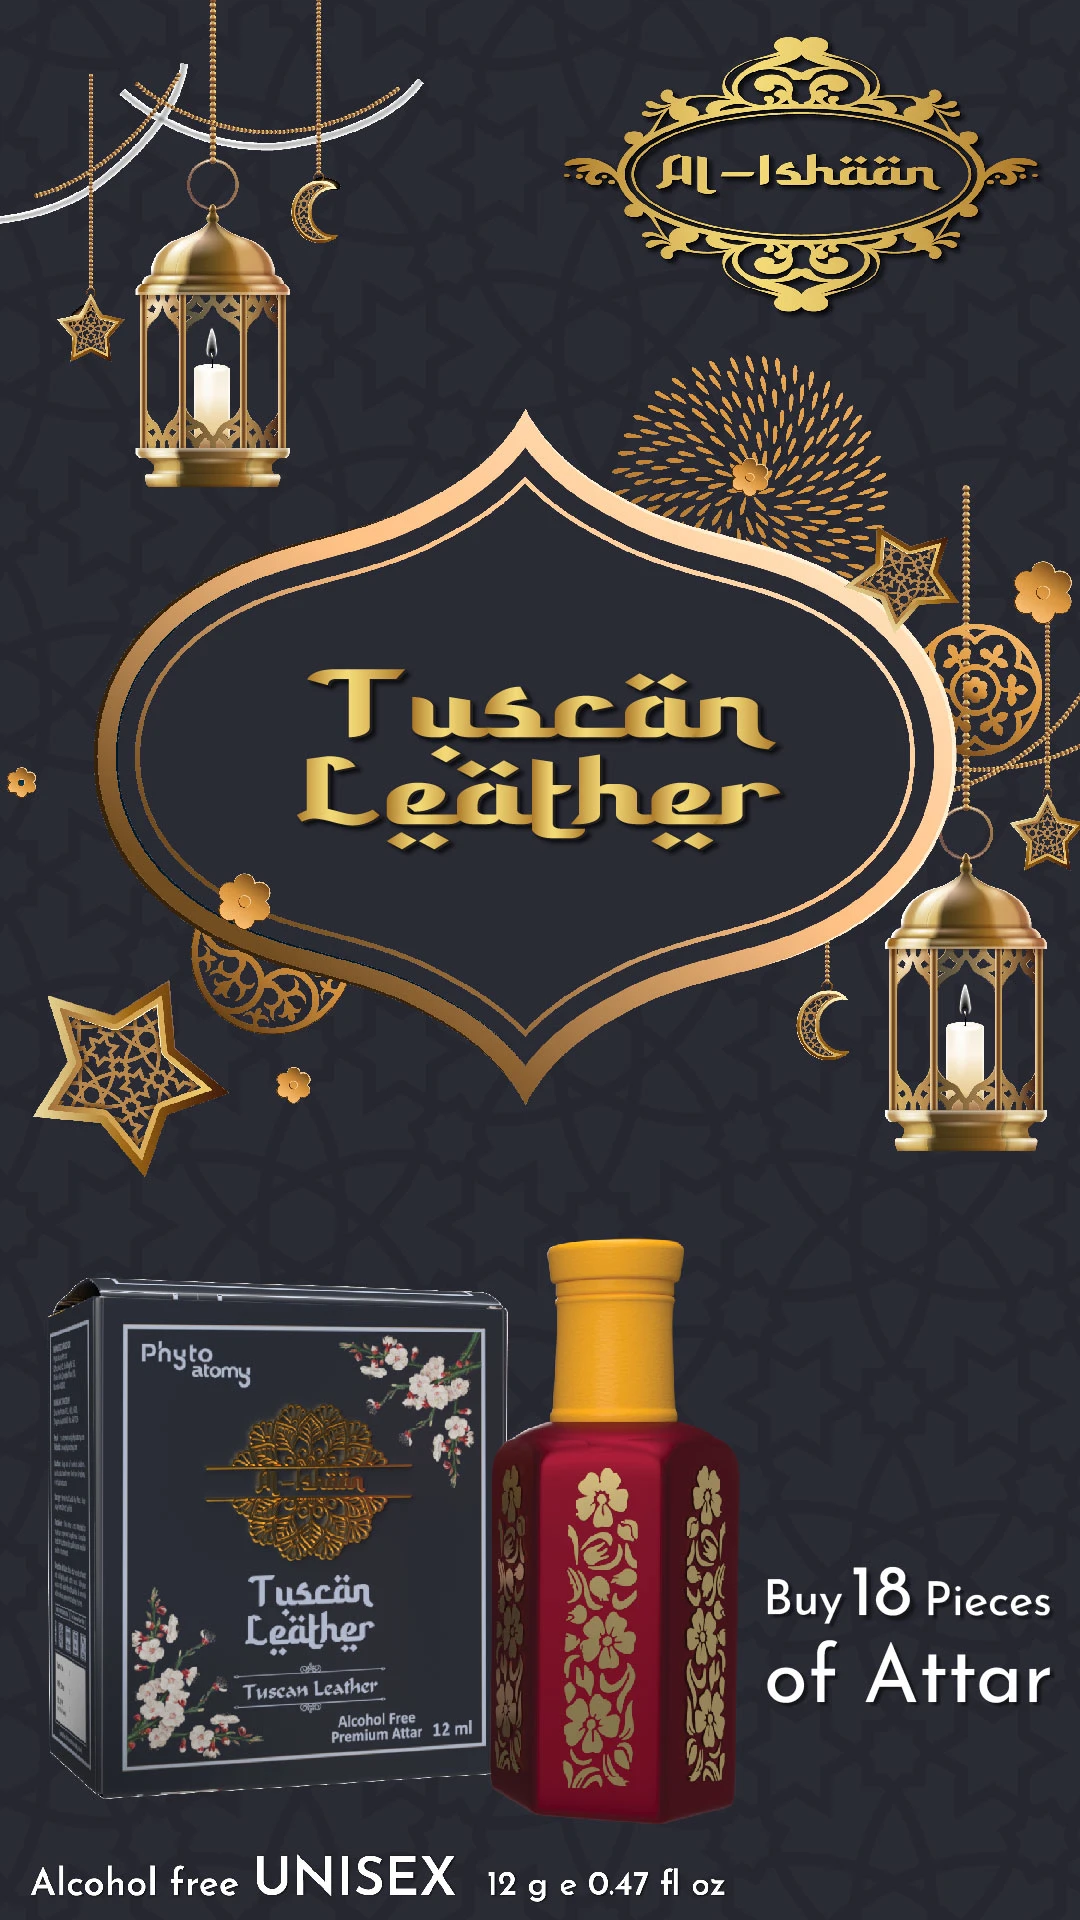 RBV B2B Al Ishan Tuscan Leather Attar (12ml)-18 Pcs.